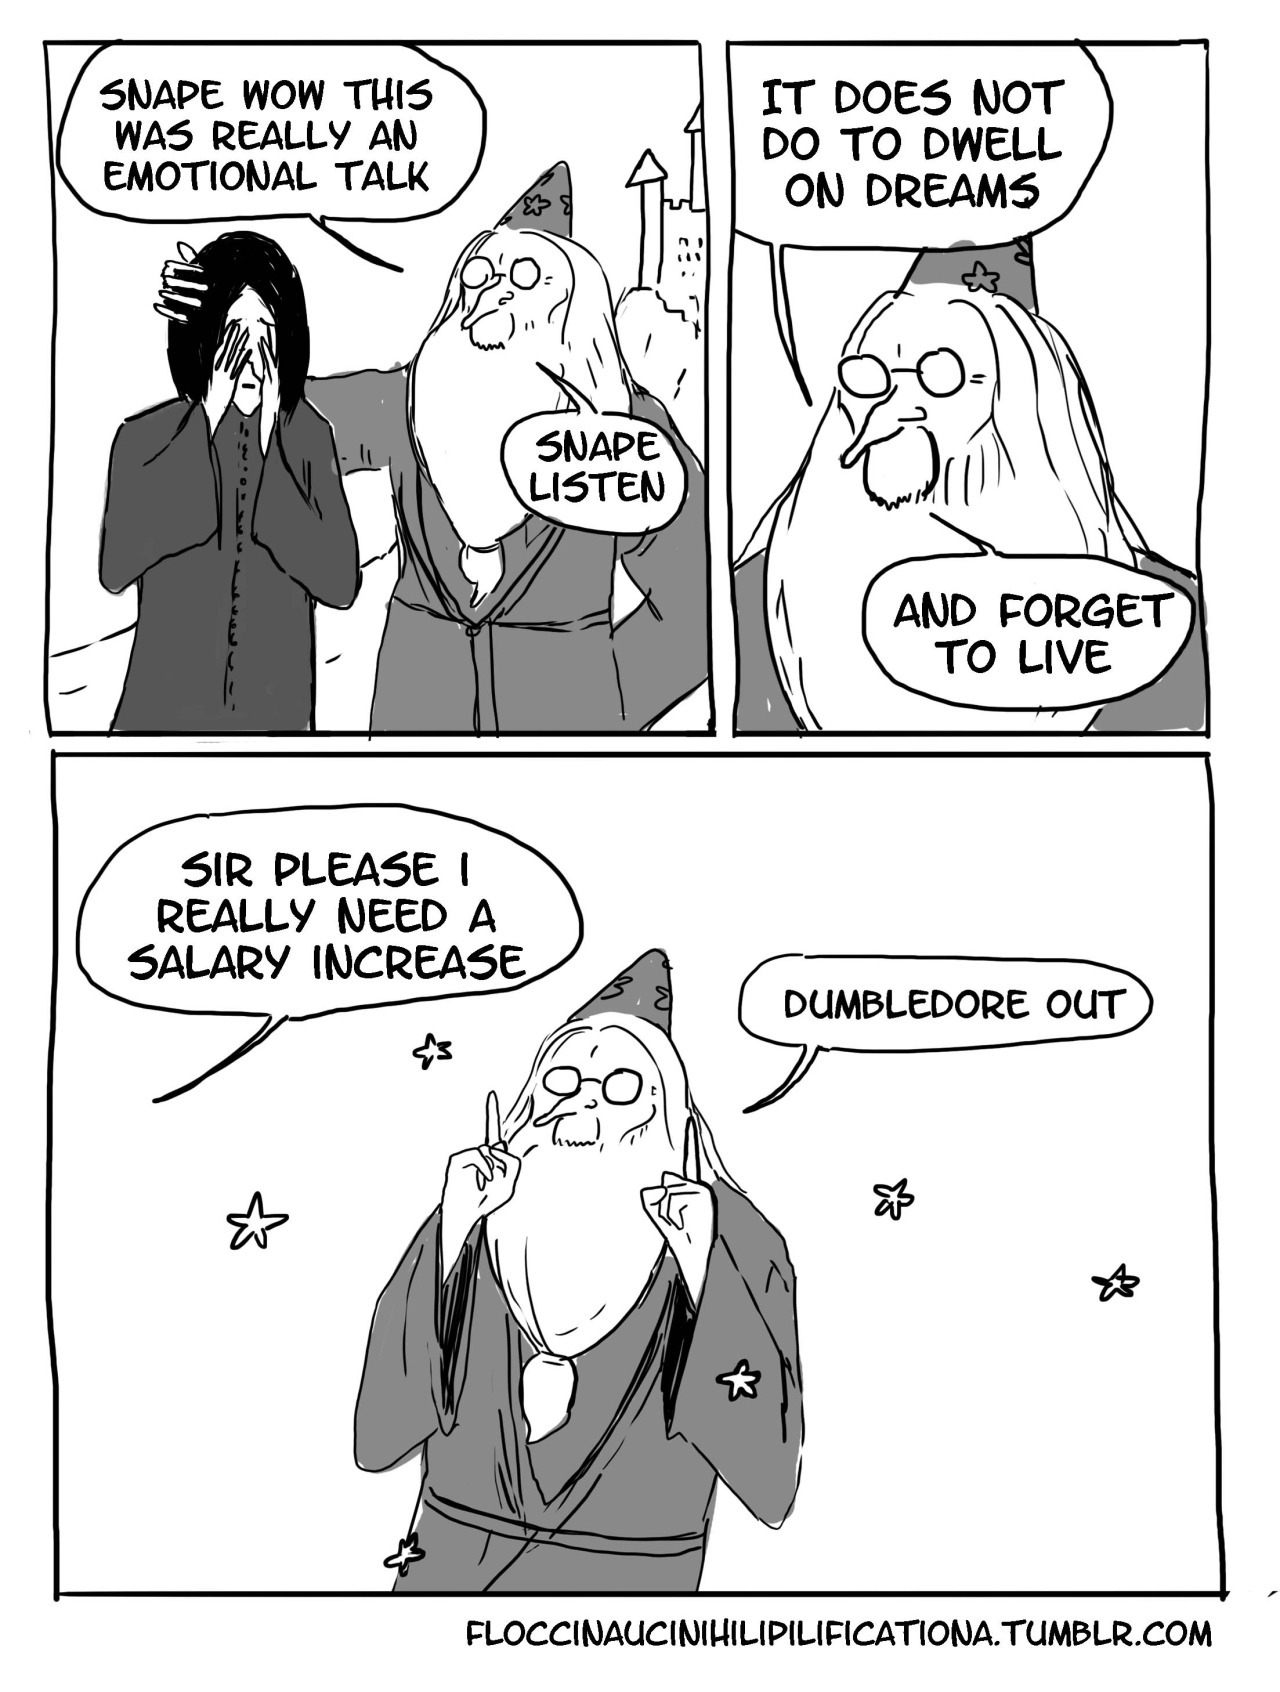 Dumbledore out! - meme